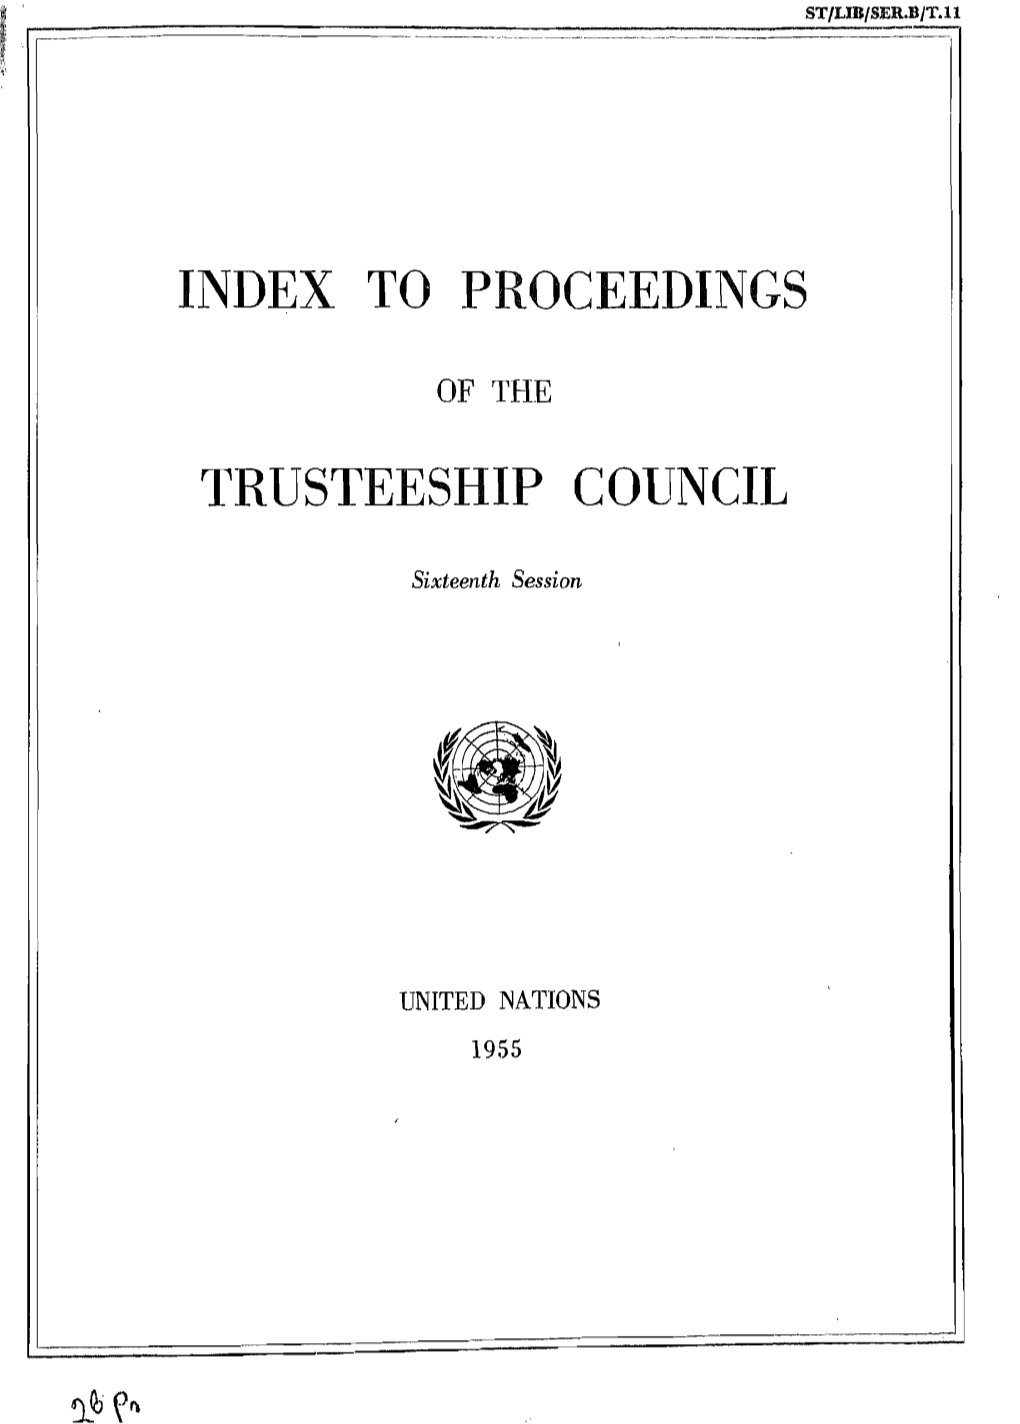 Index to Proceedings of the Trusteeship